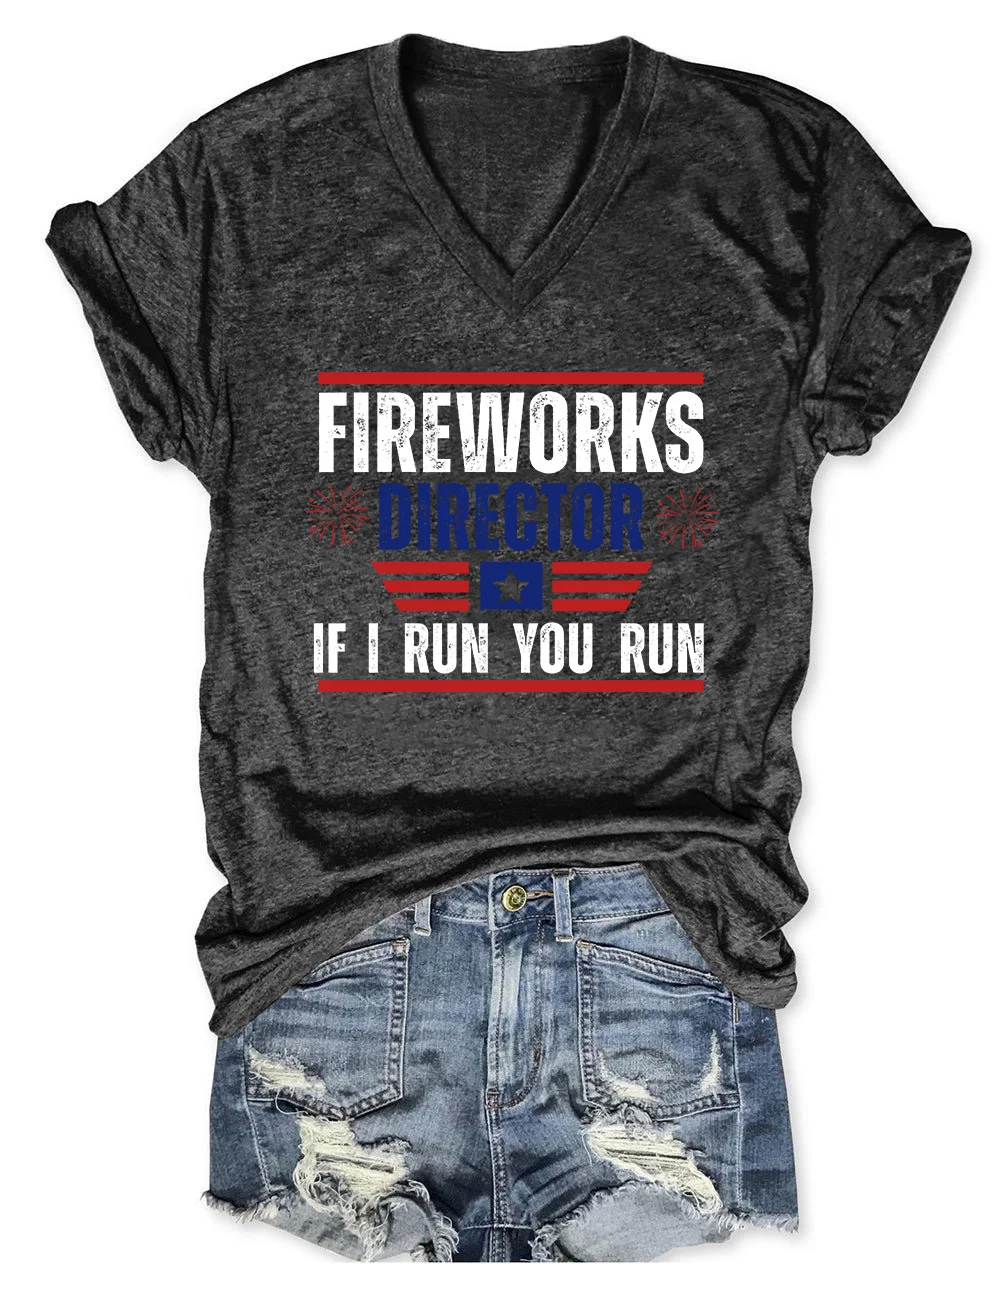 Fireworks Director I Run You Run V-Neck T-Shirt